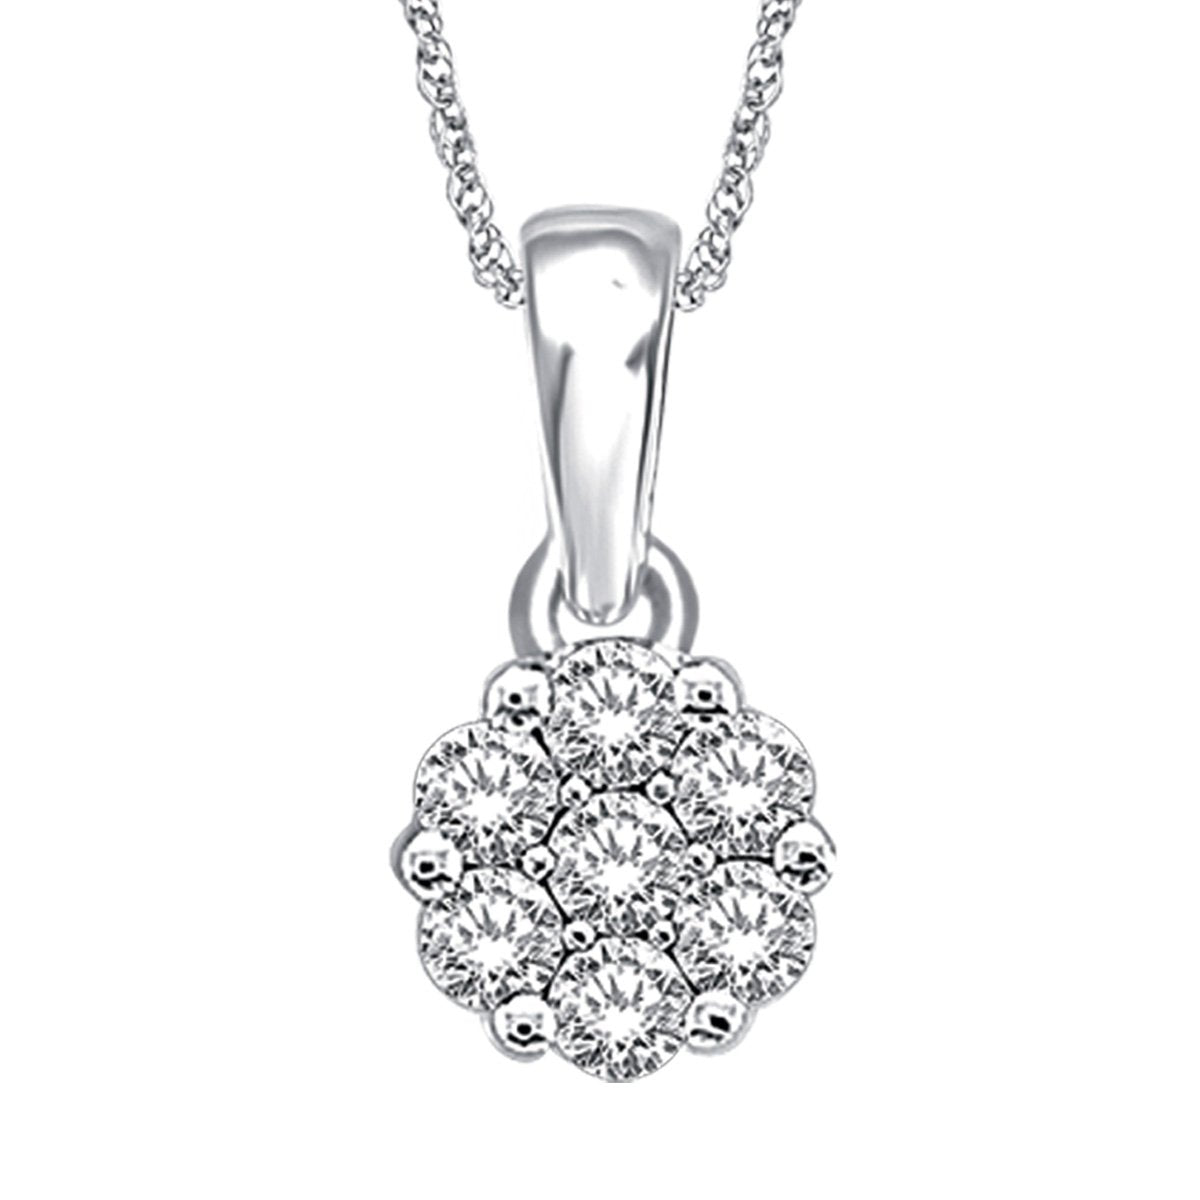 Diamond Flower Pendant in 14KT Gold - Available in Multiple Carat Sizes